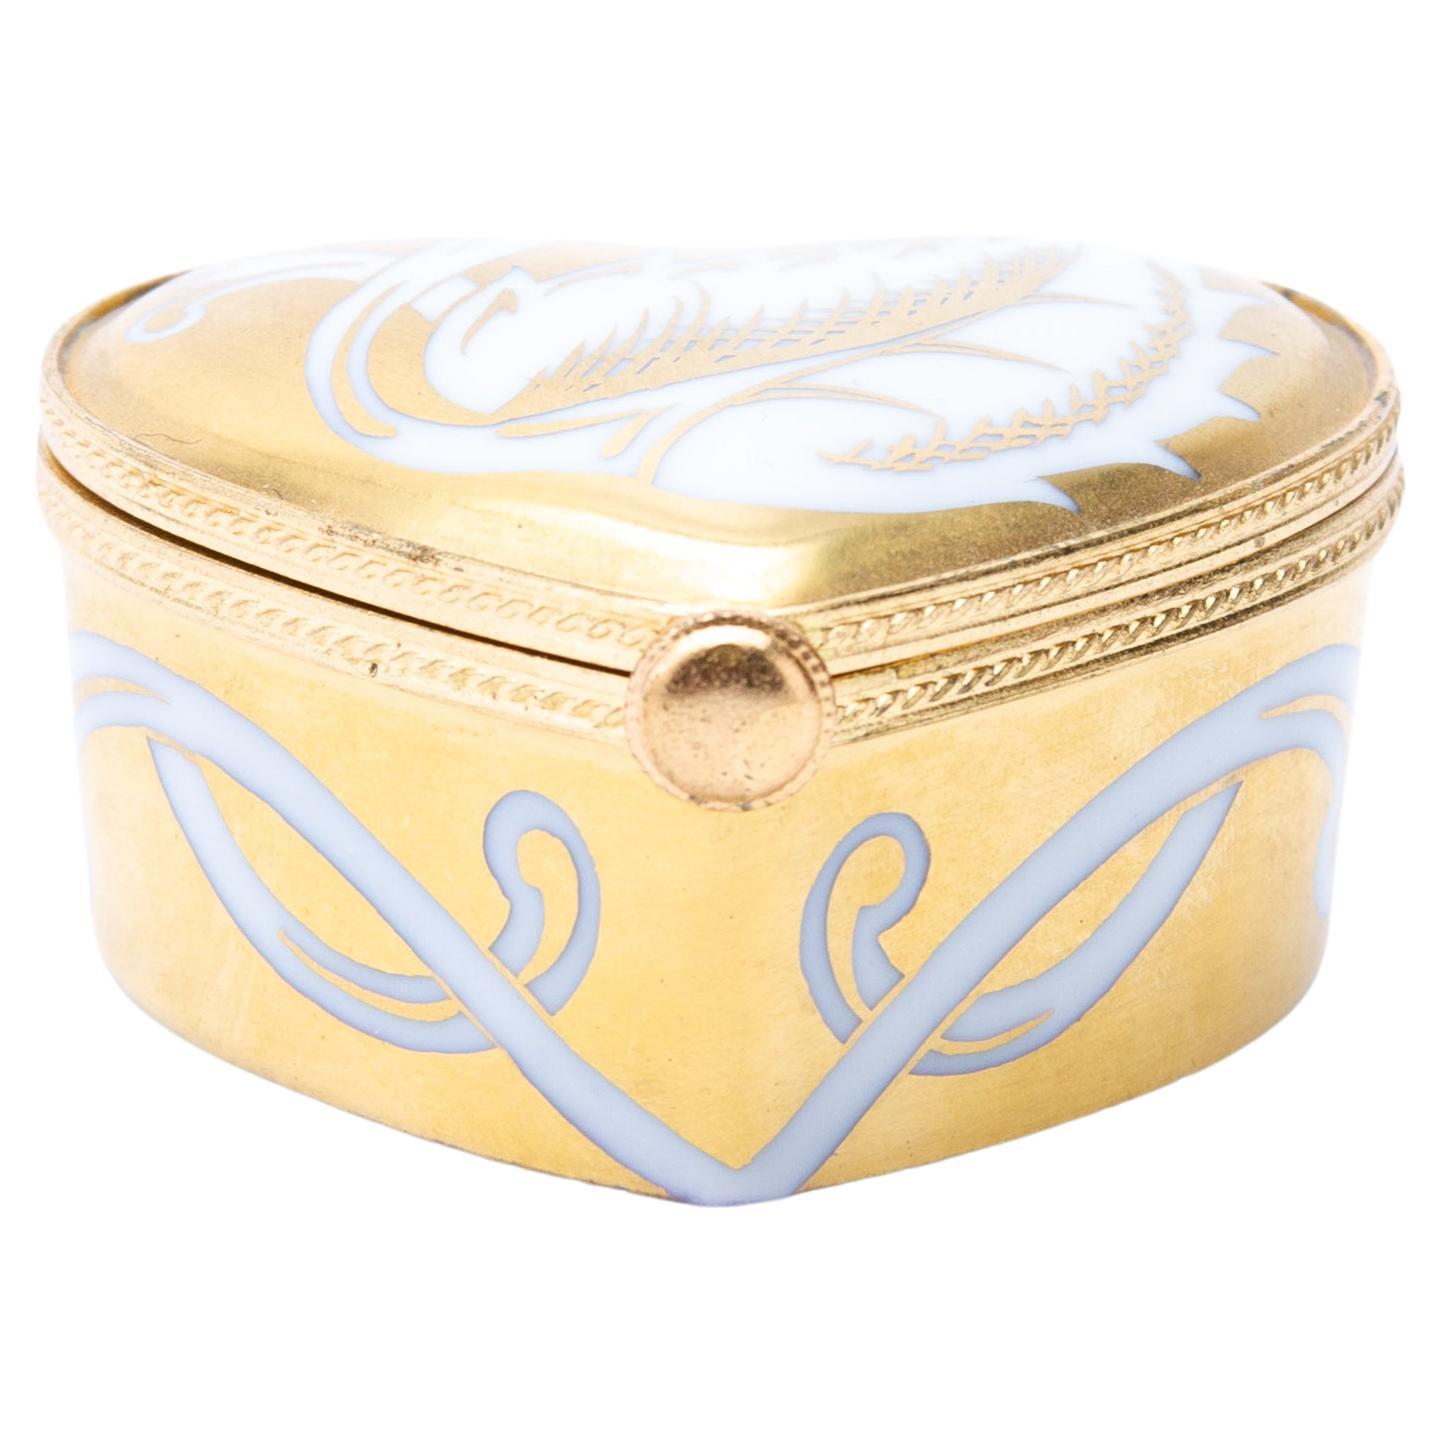 Tiffany & Co. "Aubepine" 24KT Gold Gilt Porcelain Heart Shaped Lidded Box